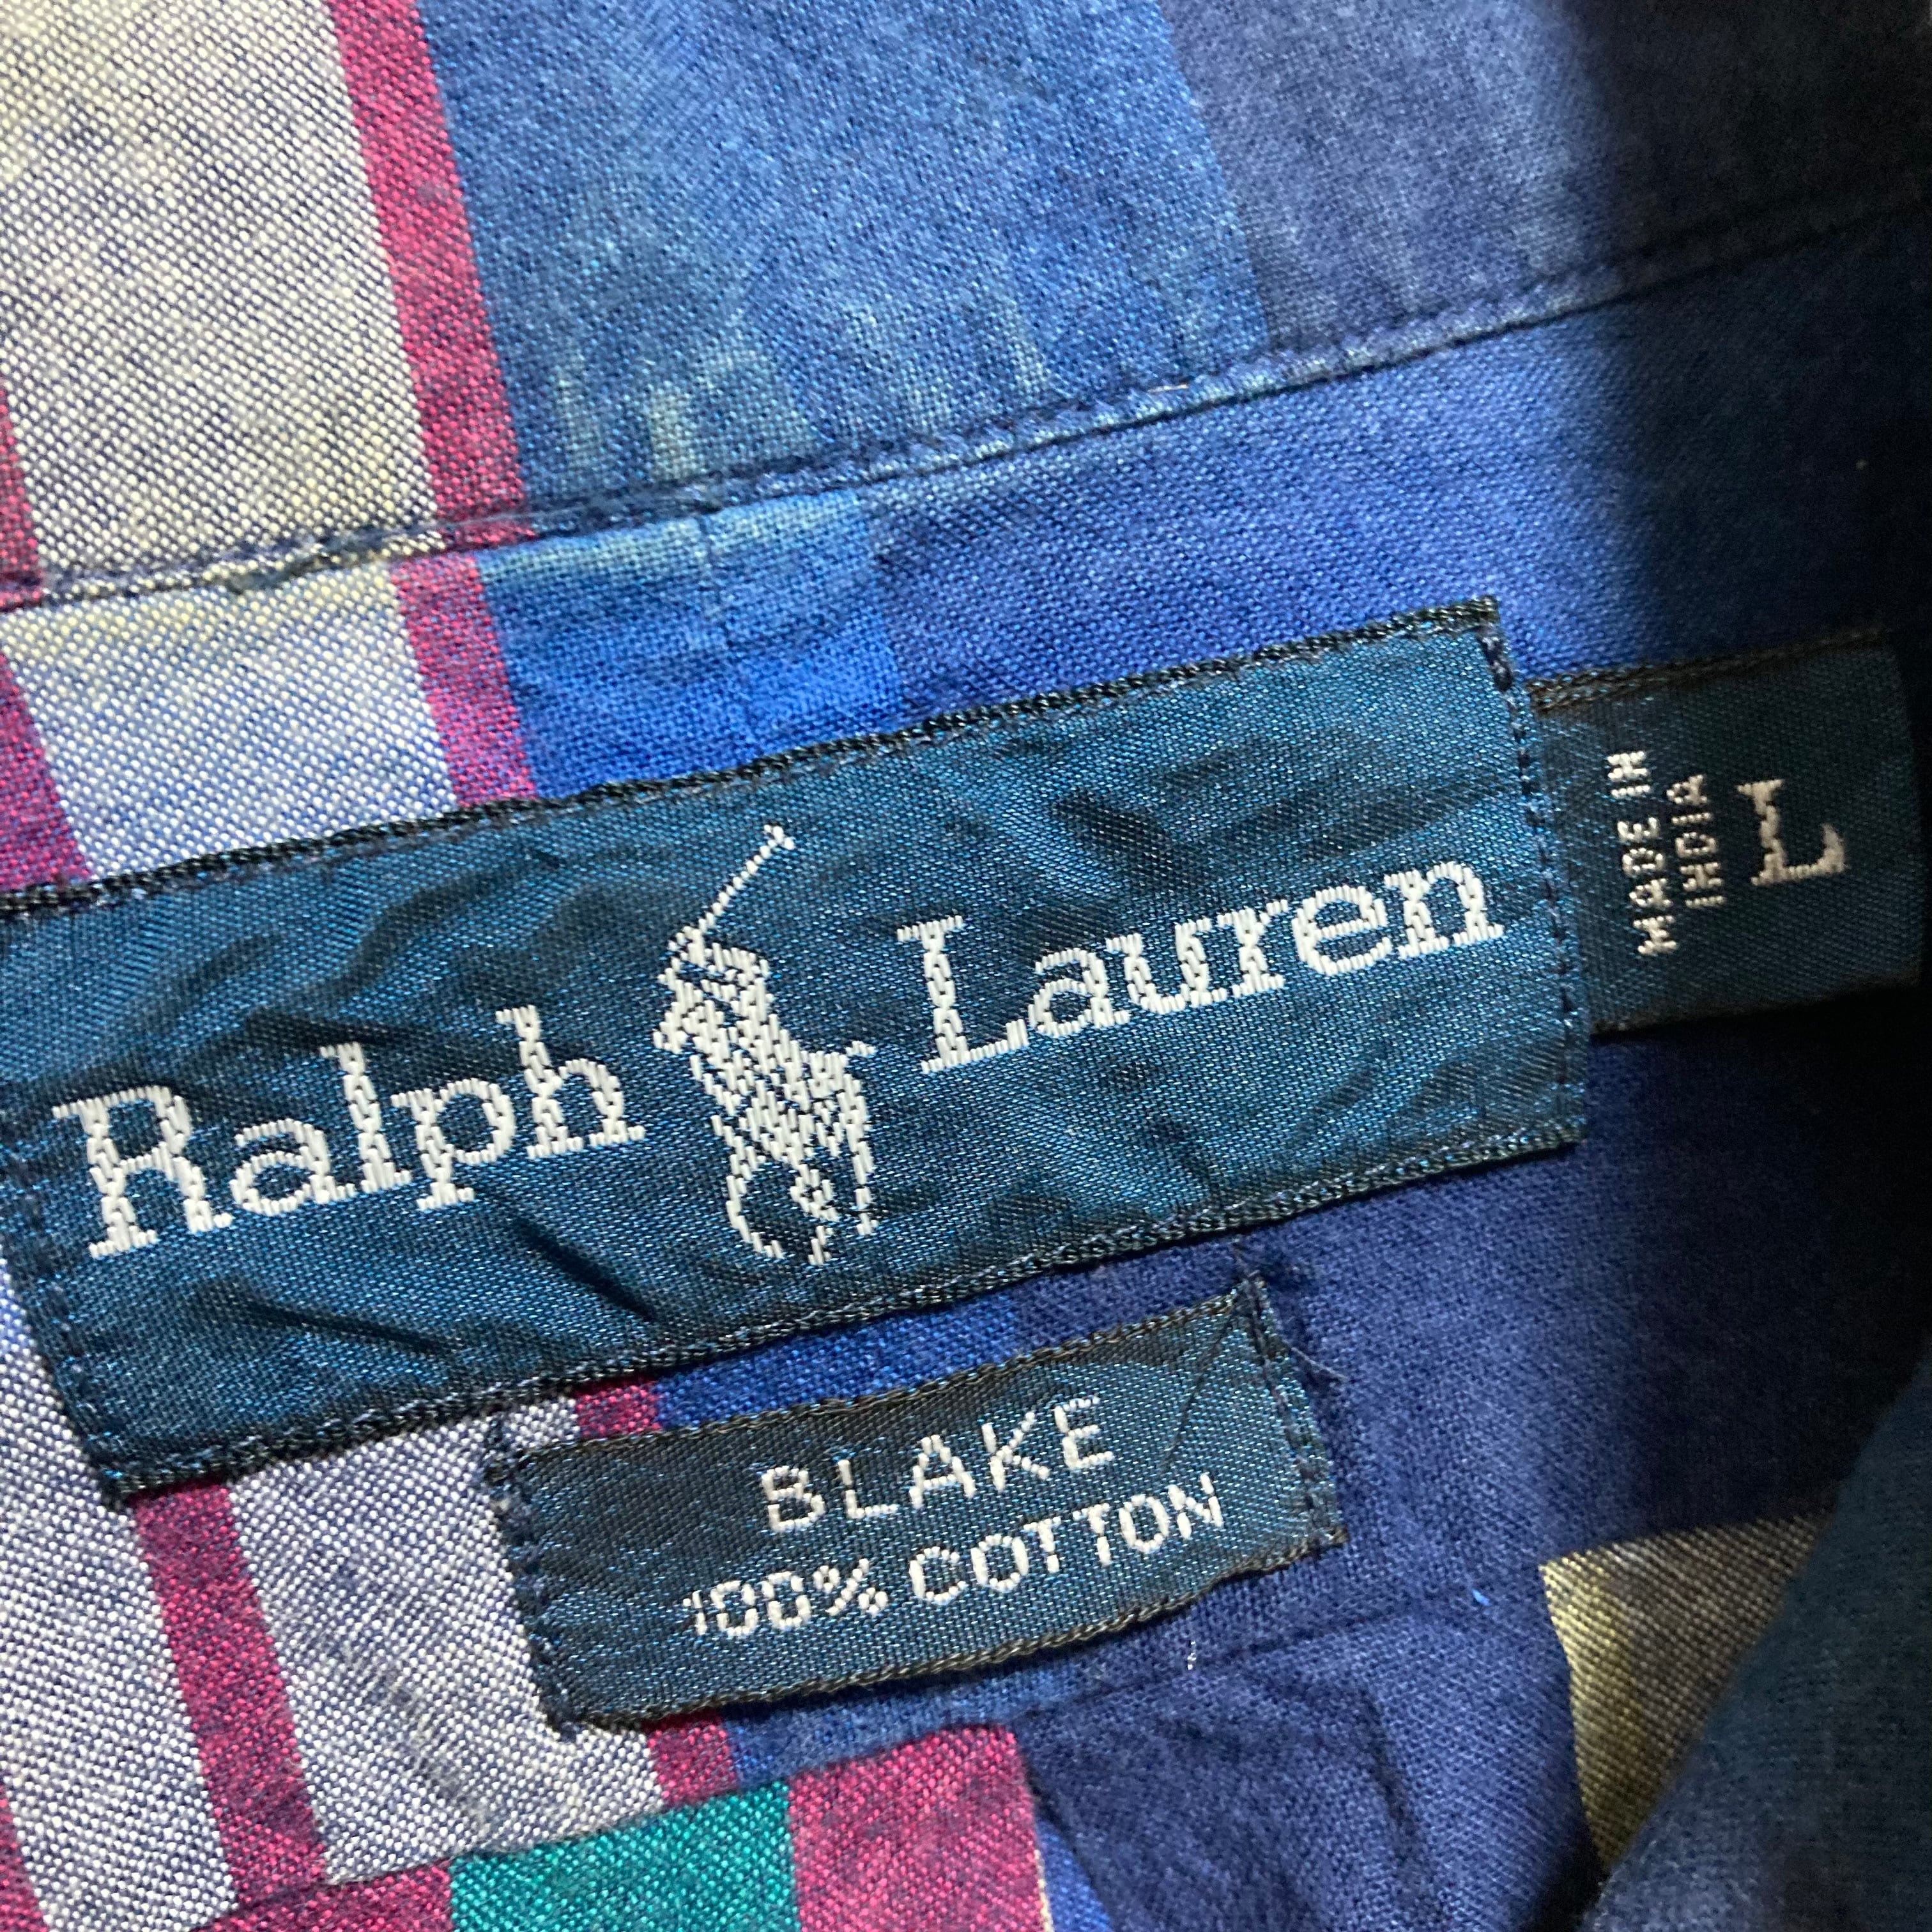 【Ralph Lauren】S/S Check BD Shirt L “BLAKE” ラルフローレン 半袖チェックシャツ チェック柄  ボタンダウンシャツ BDシャツ ブレイク 刺繍ロゴ ポニーロゴ ワンポイントロゴ アメリカ 古着